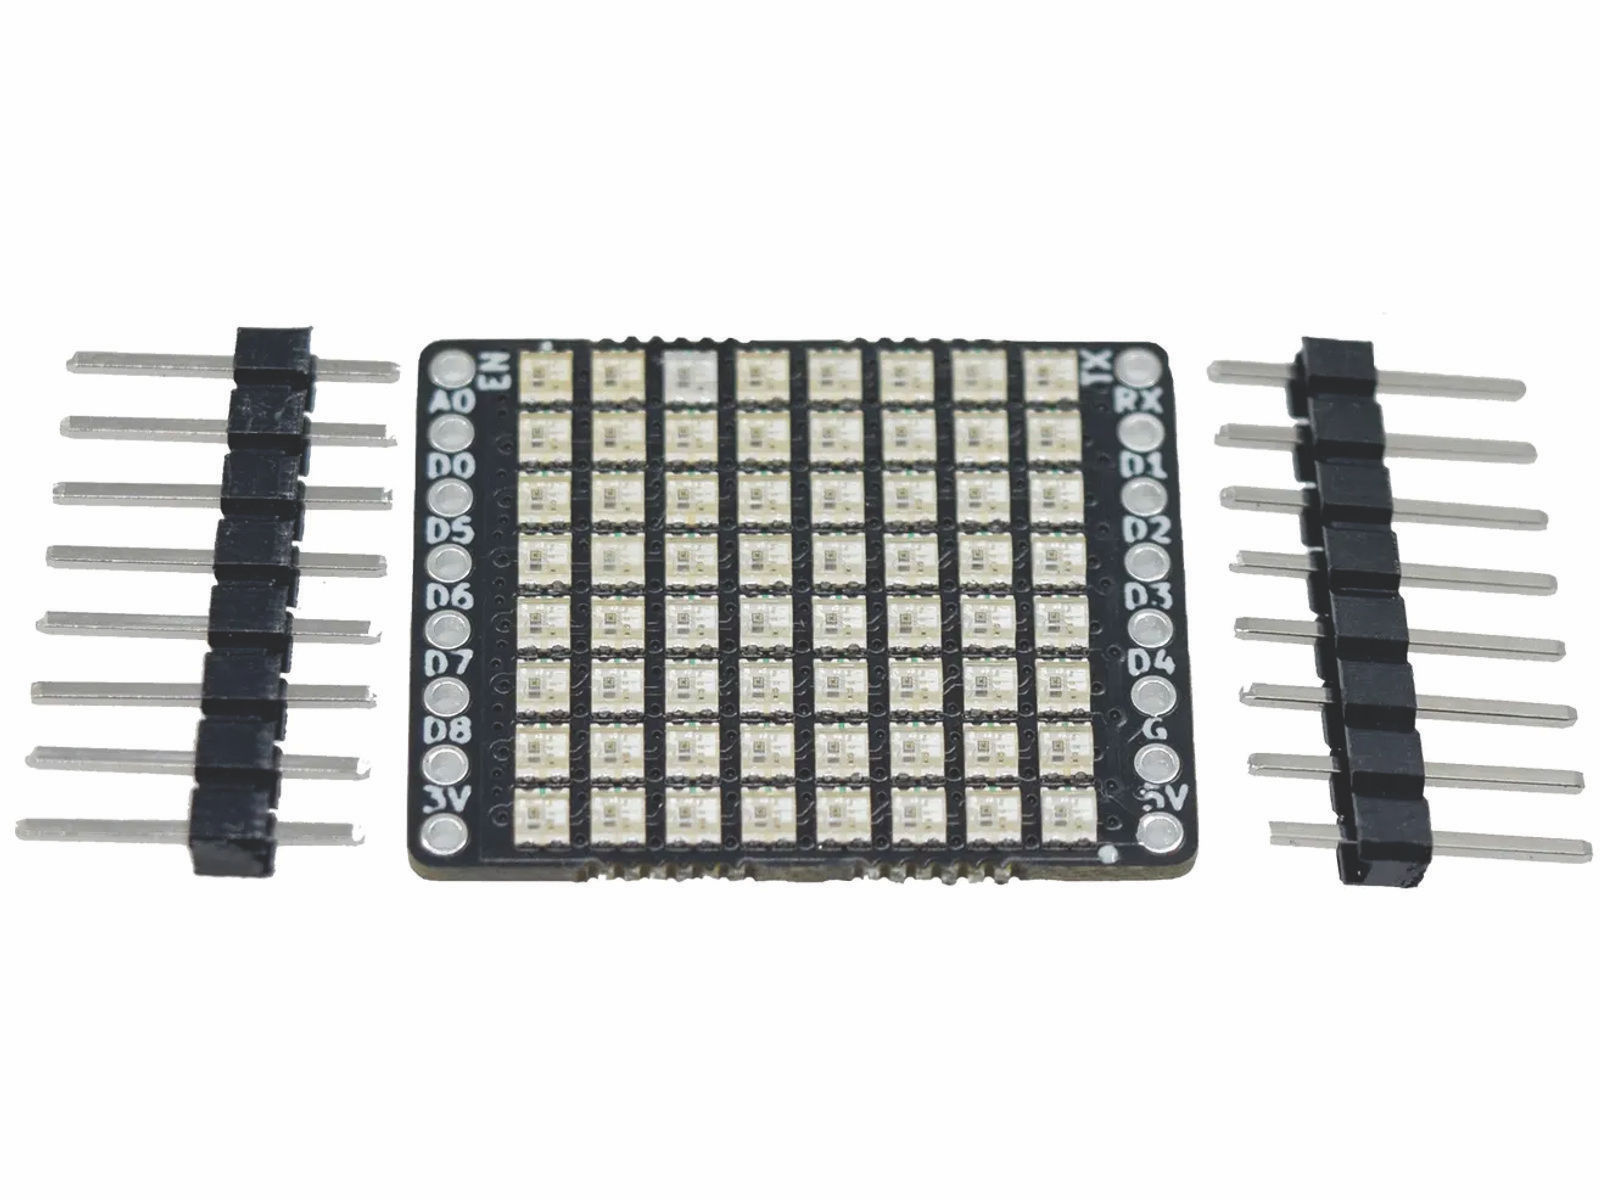 WEMOS D1 Mini 8x8 Addressable RGB LED Shield